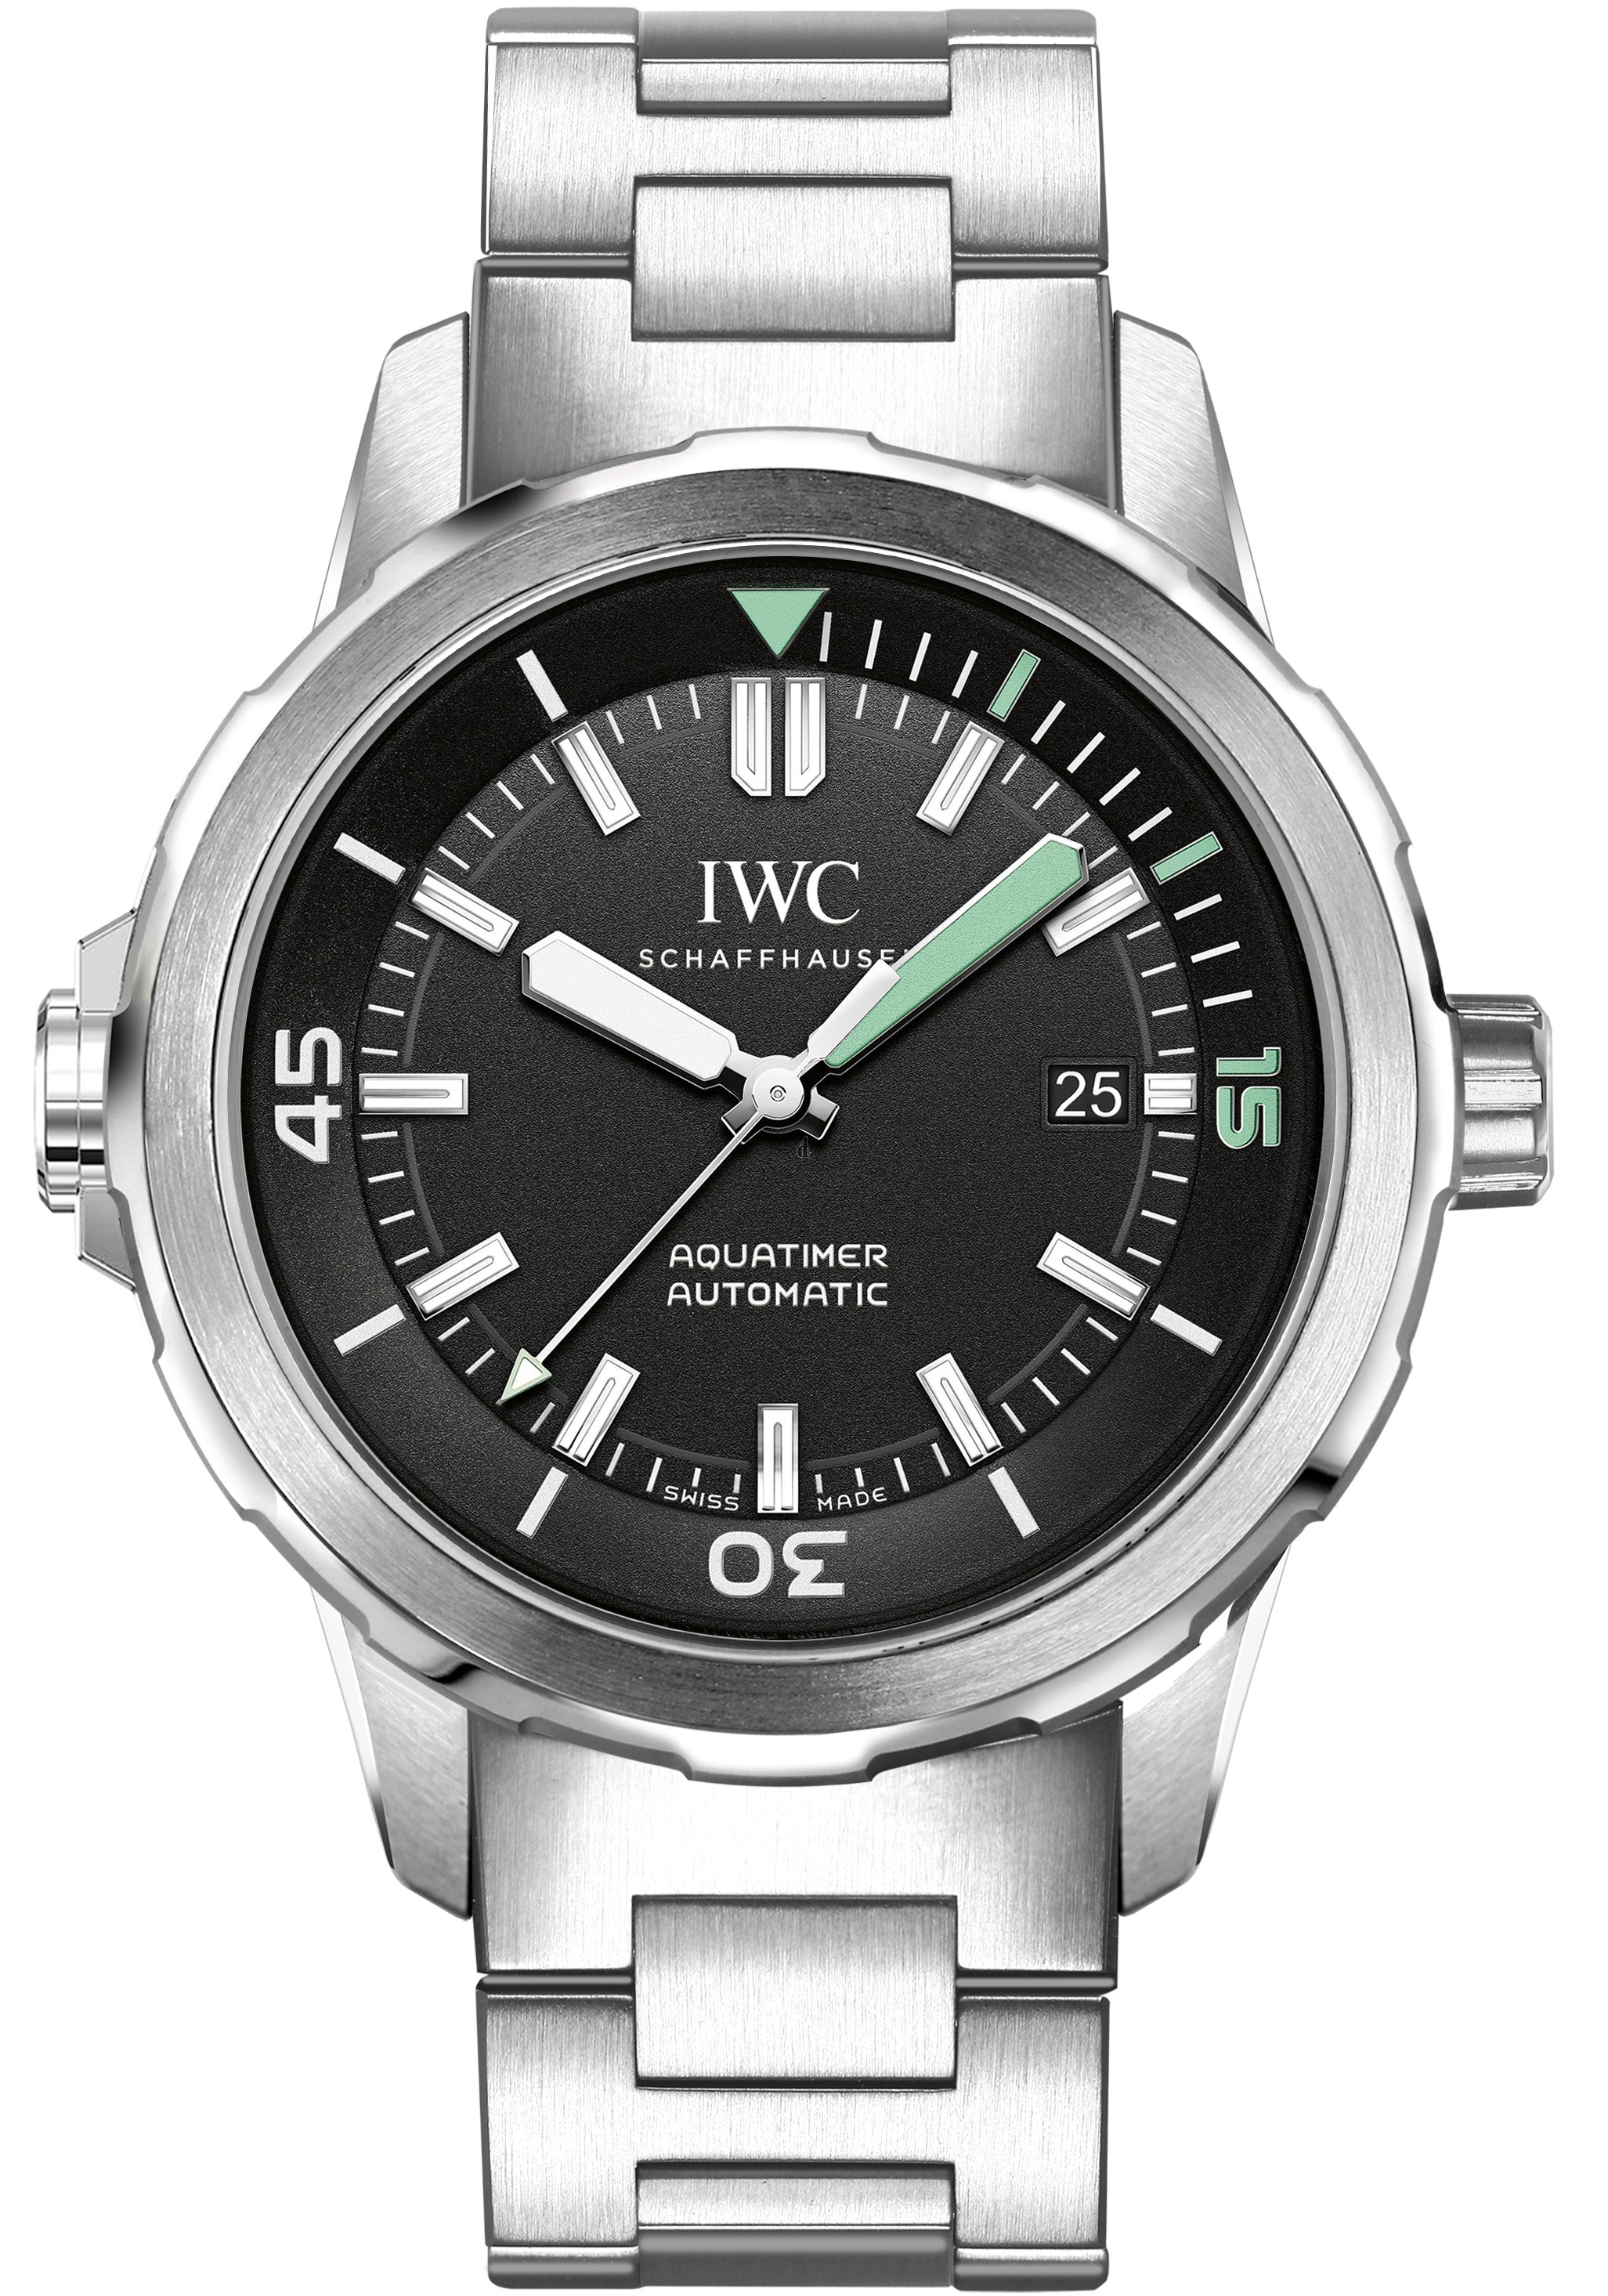 Cheap IWC Aquatimer Automatic 42mm Mens Watch IW329002 fake.